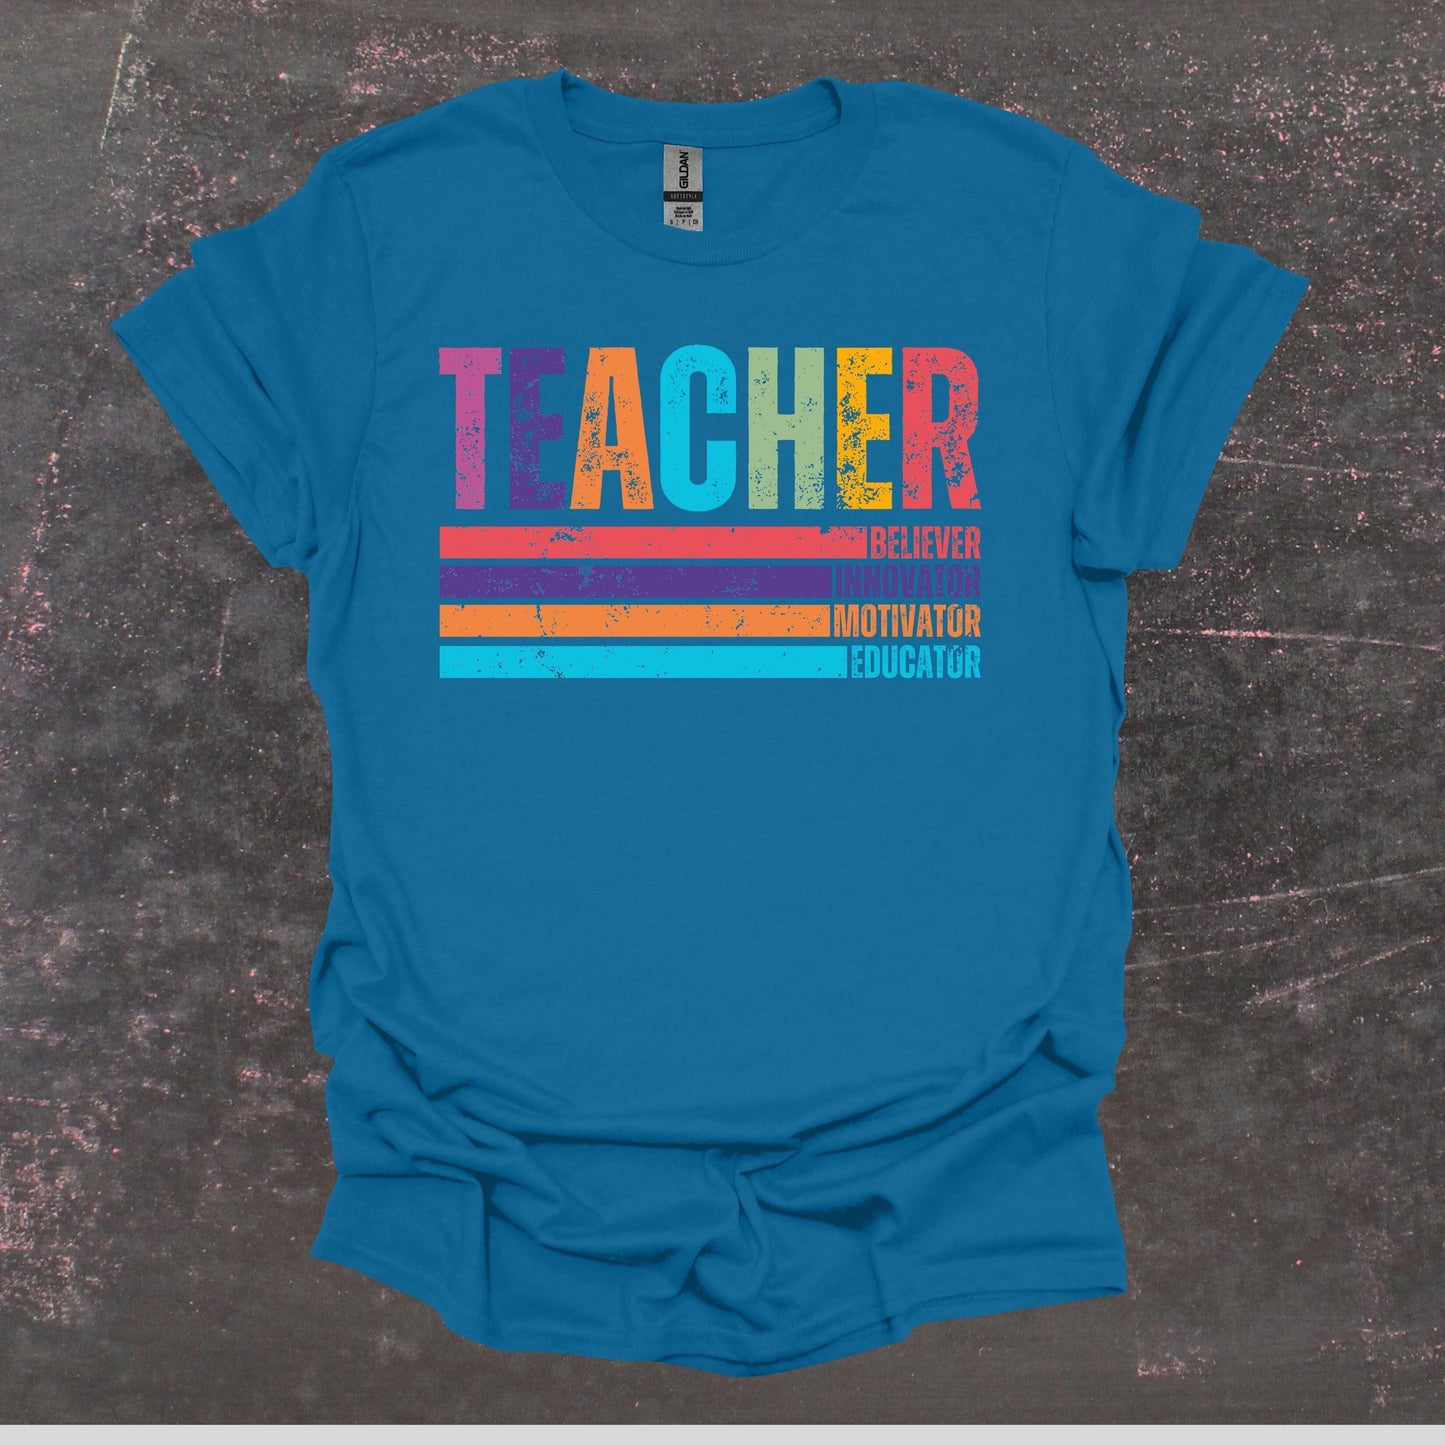 Teacher Believer Innovator Motivator Educator - Teacher T Shirt - Adult Tee Shirts T-Shirts Graphic Avenue Antique Sapphire Adult Small 